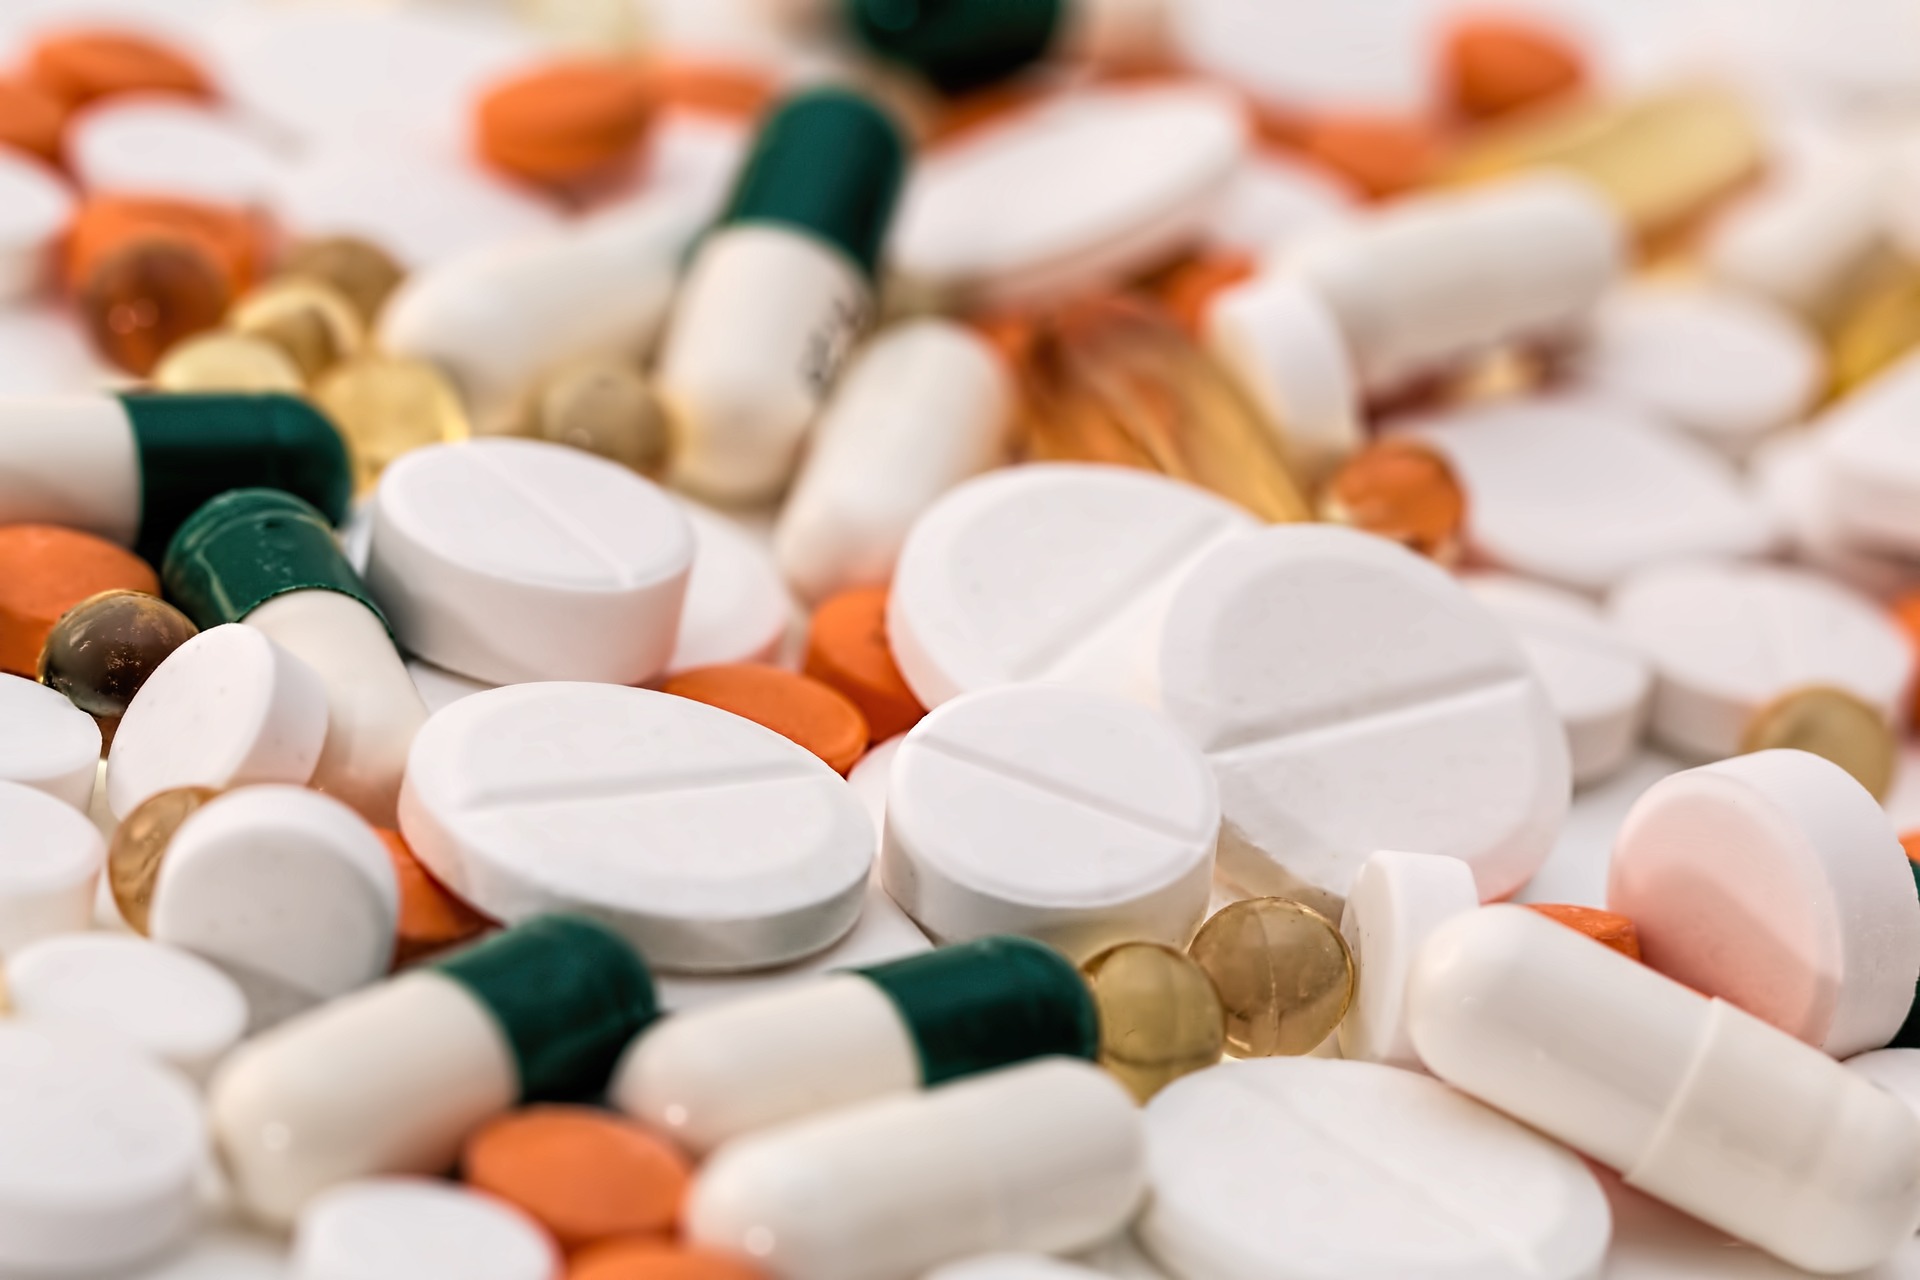 Antibiotics and other pills